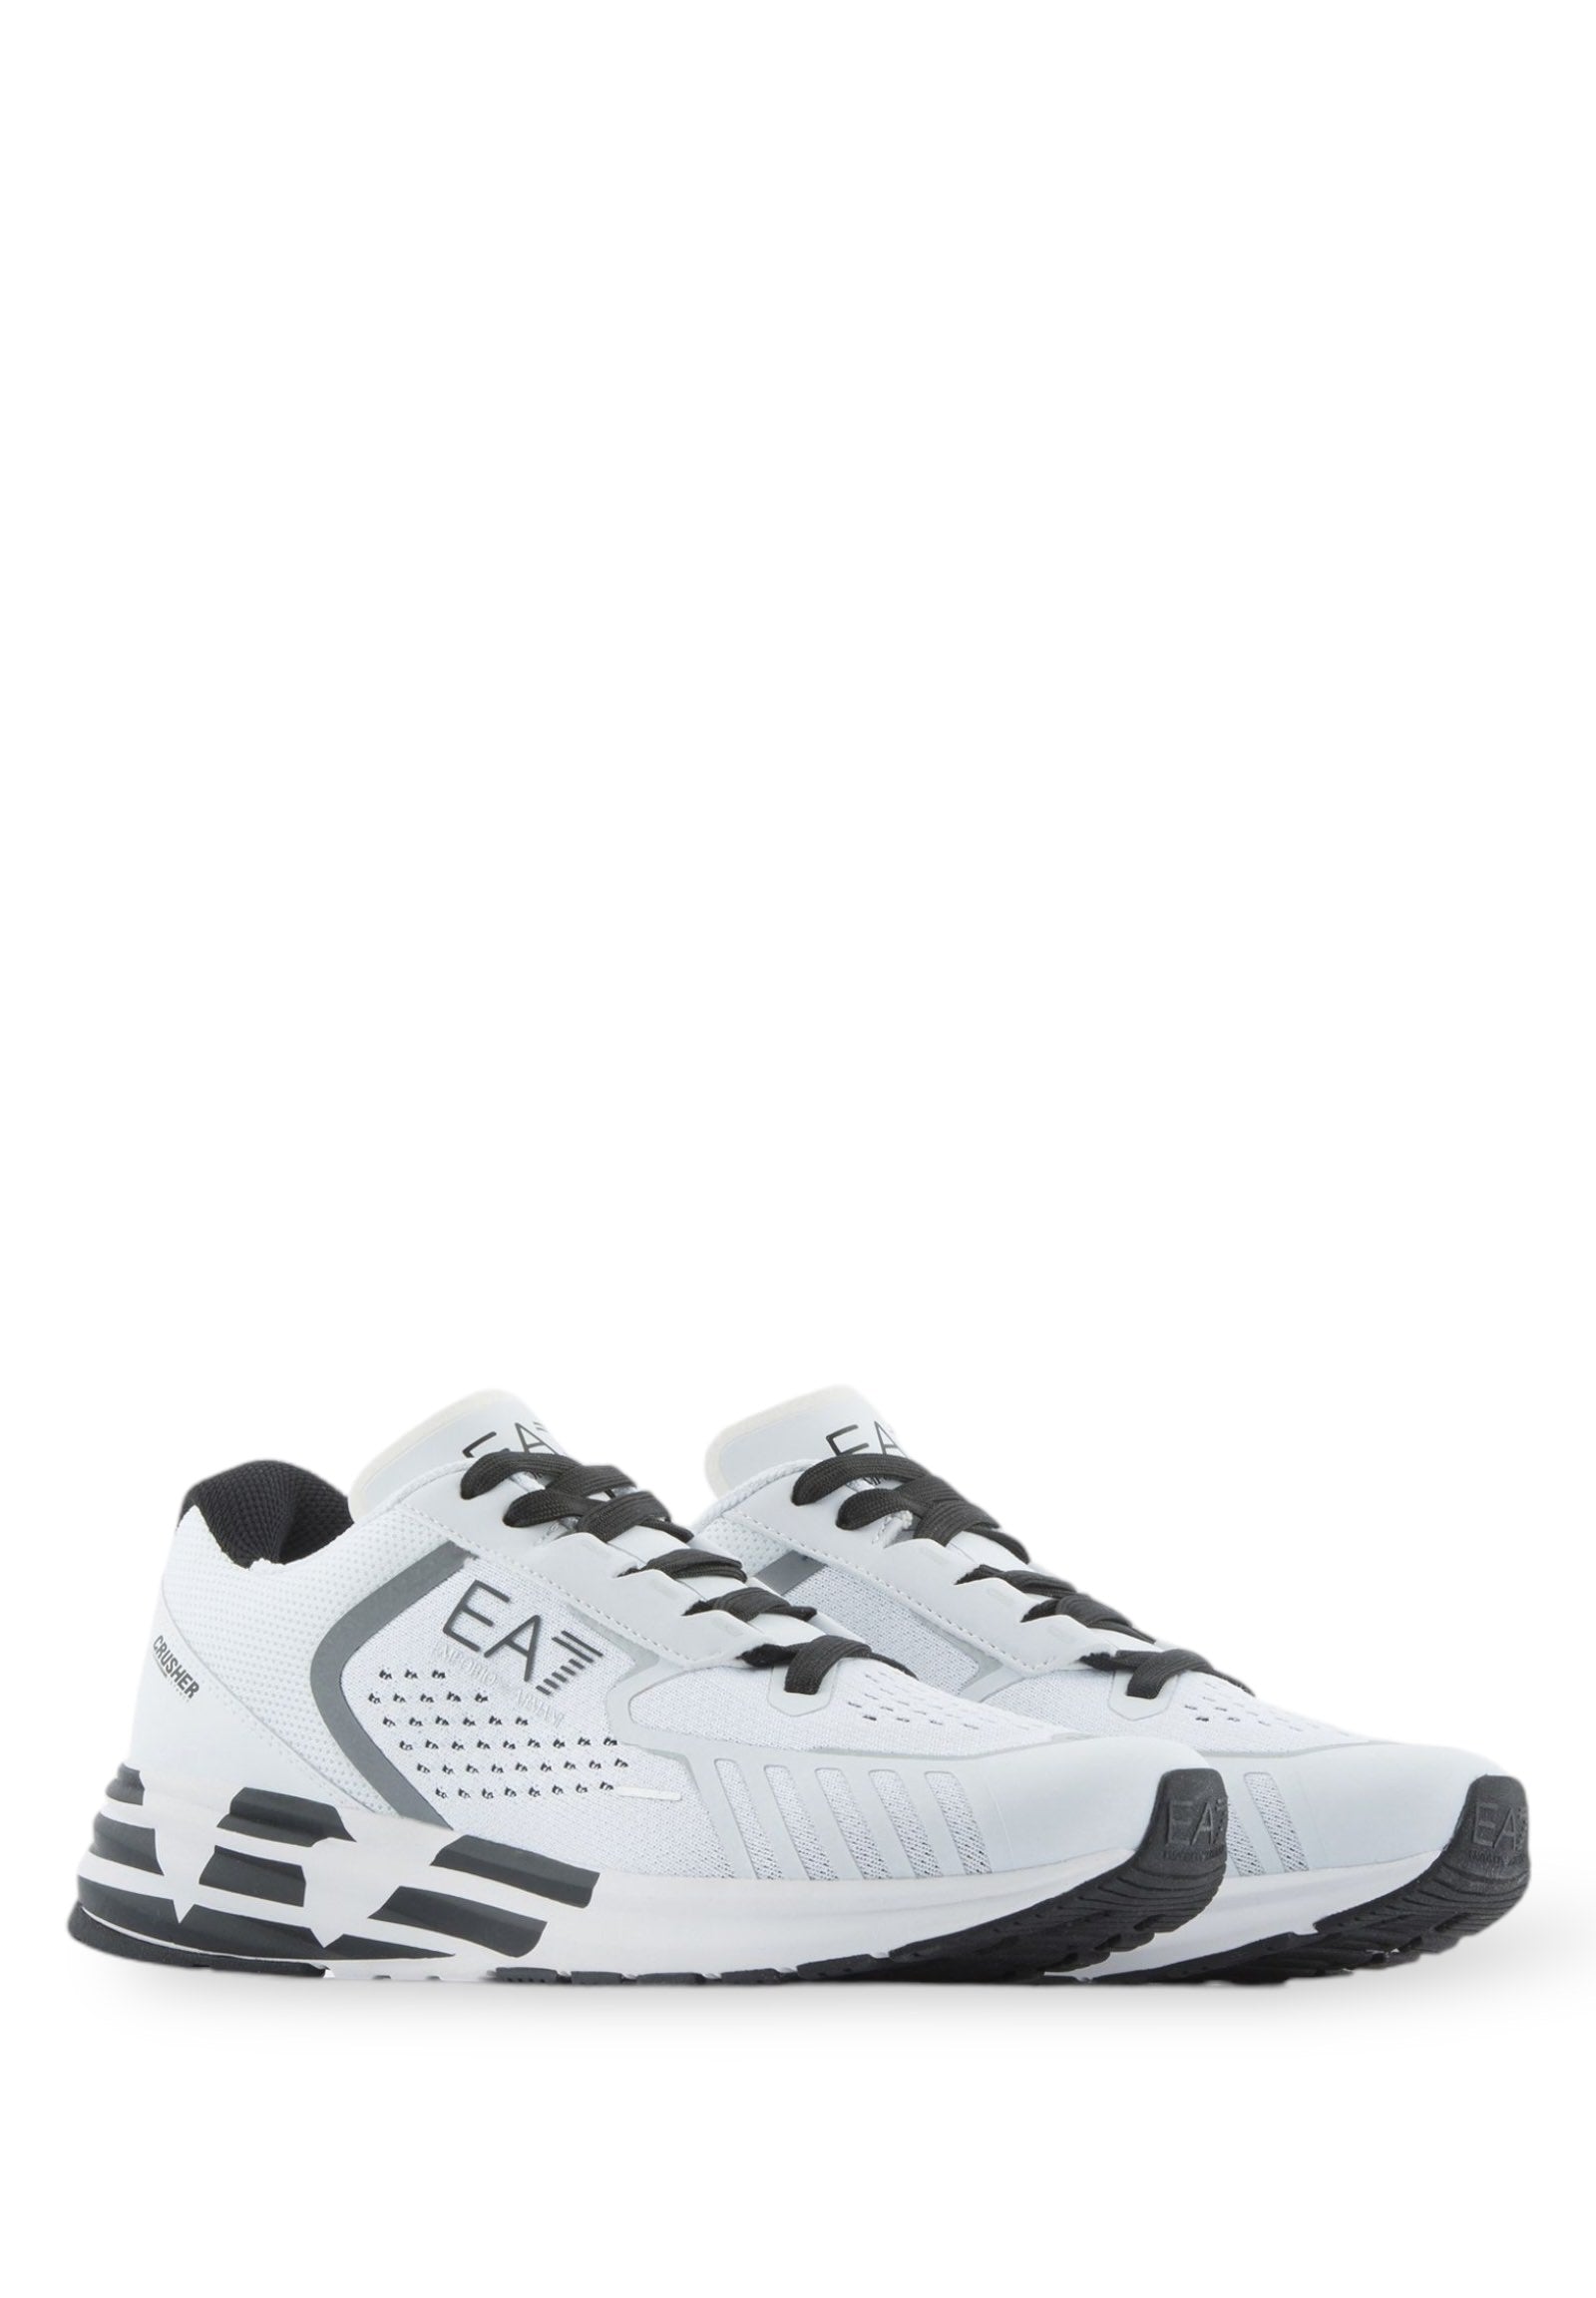 Sneakers X8x094 White+black